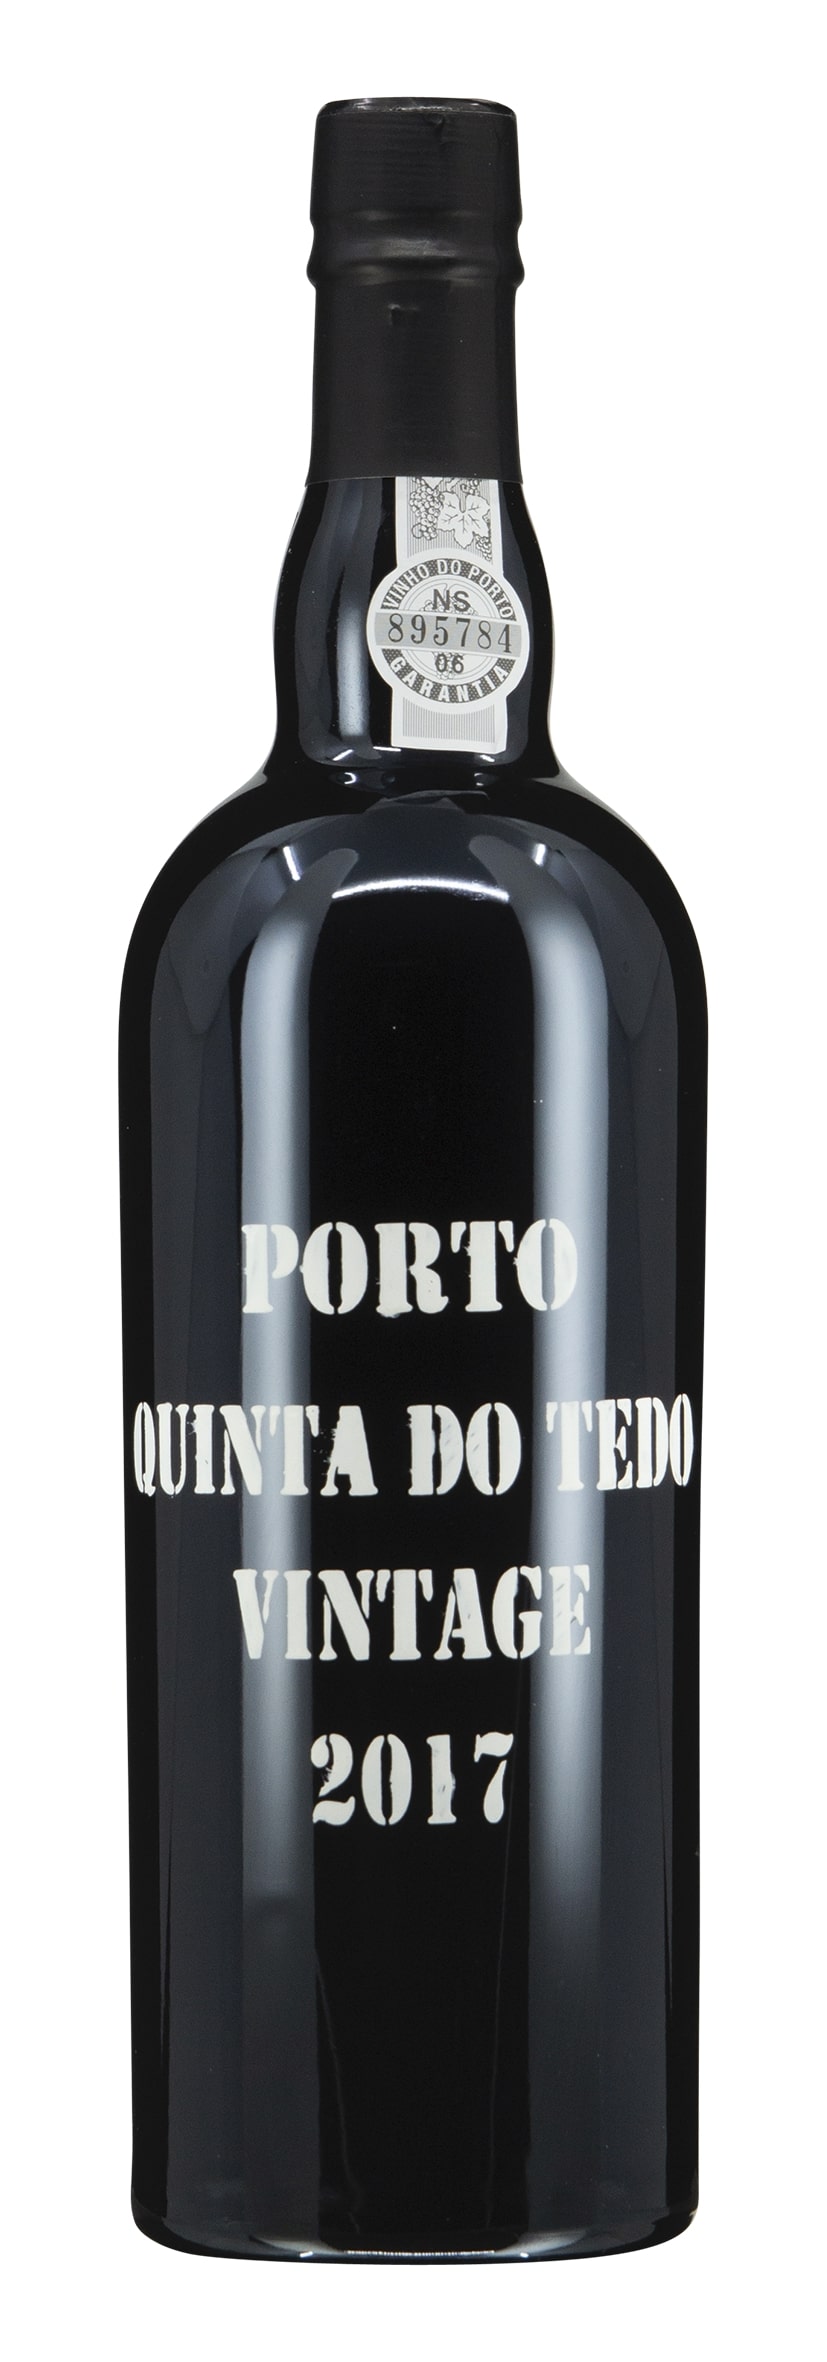 Vintage Port Quinta do Tedo 2017